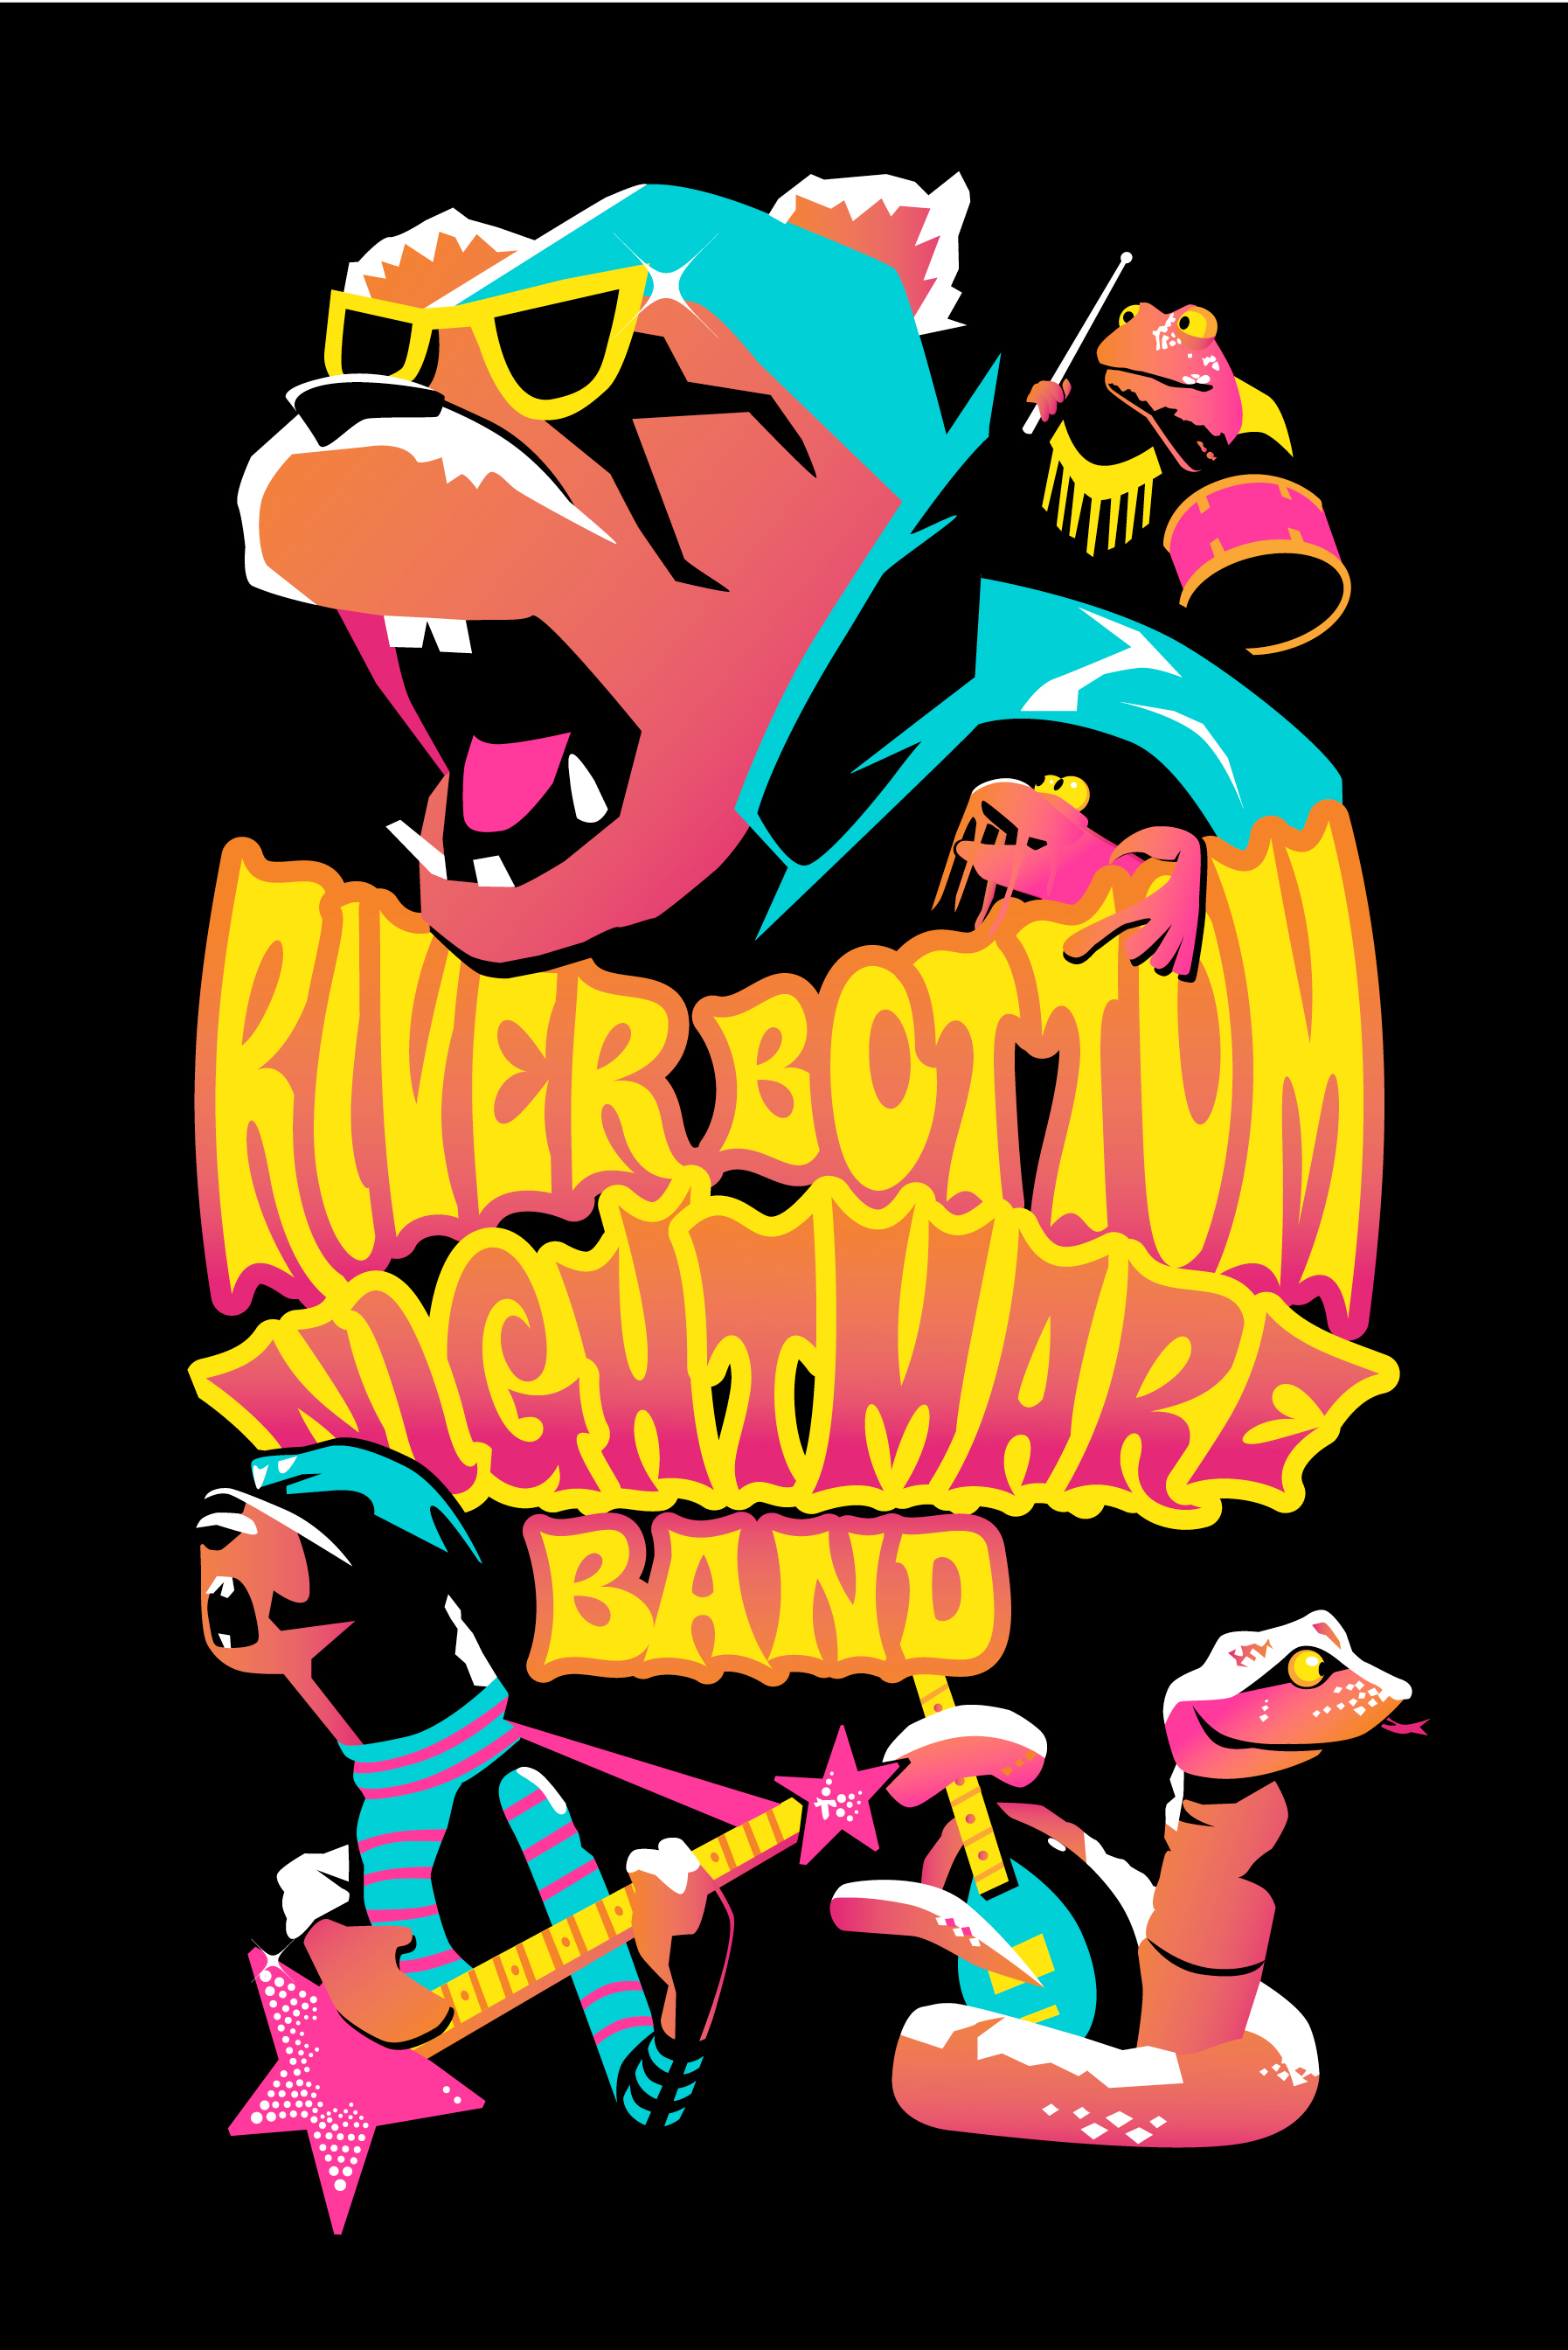 River Bottom Nightmare Band 